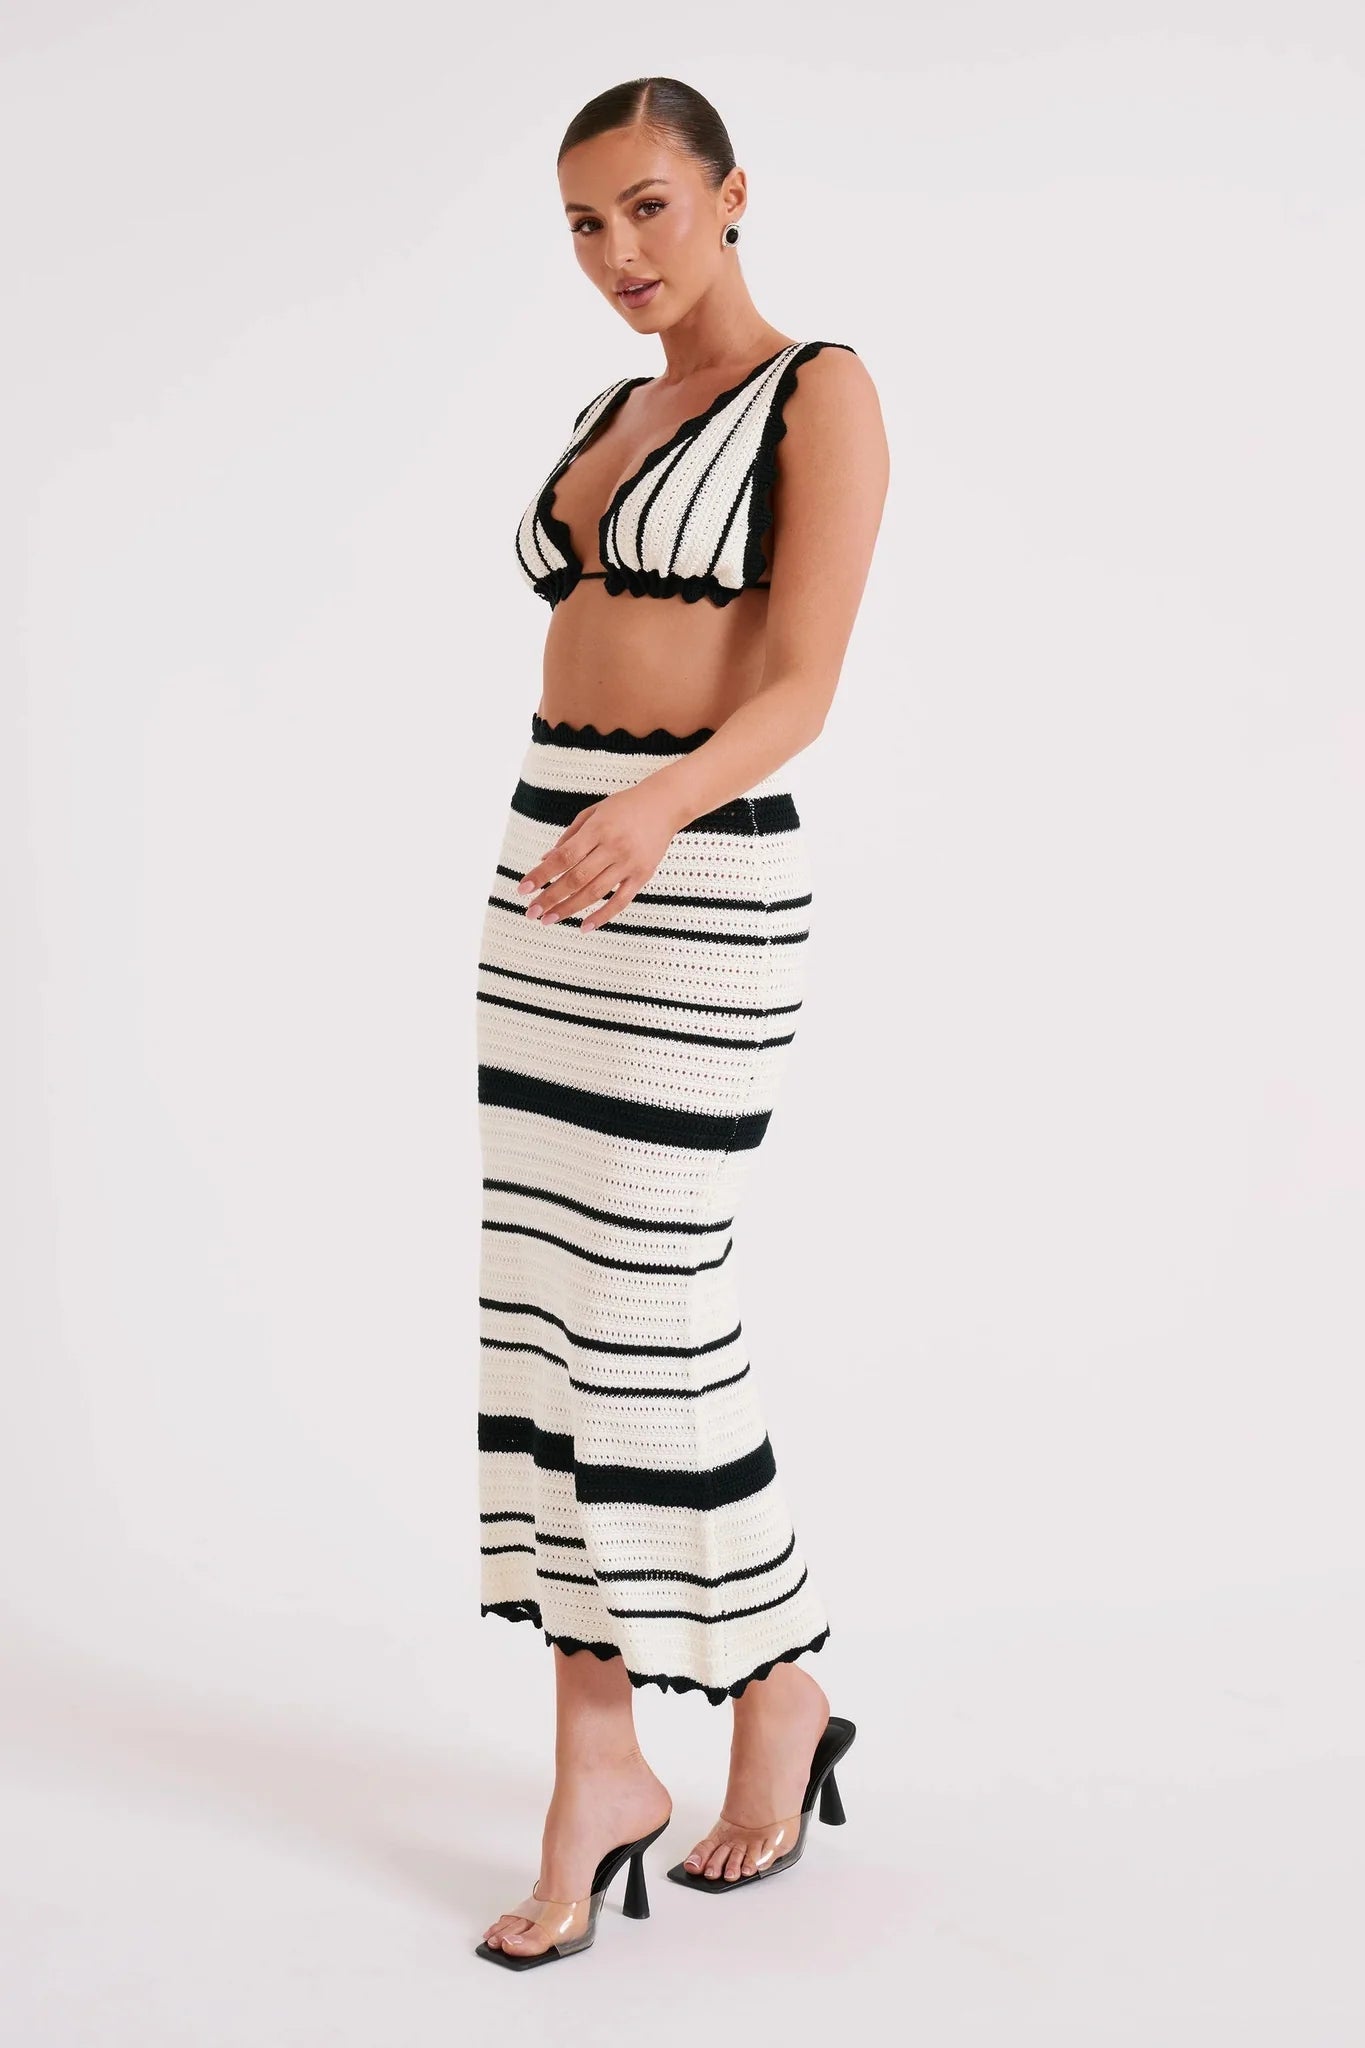 Coastelle™ - Cora's Striped Summer Set